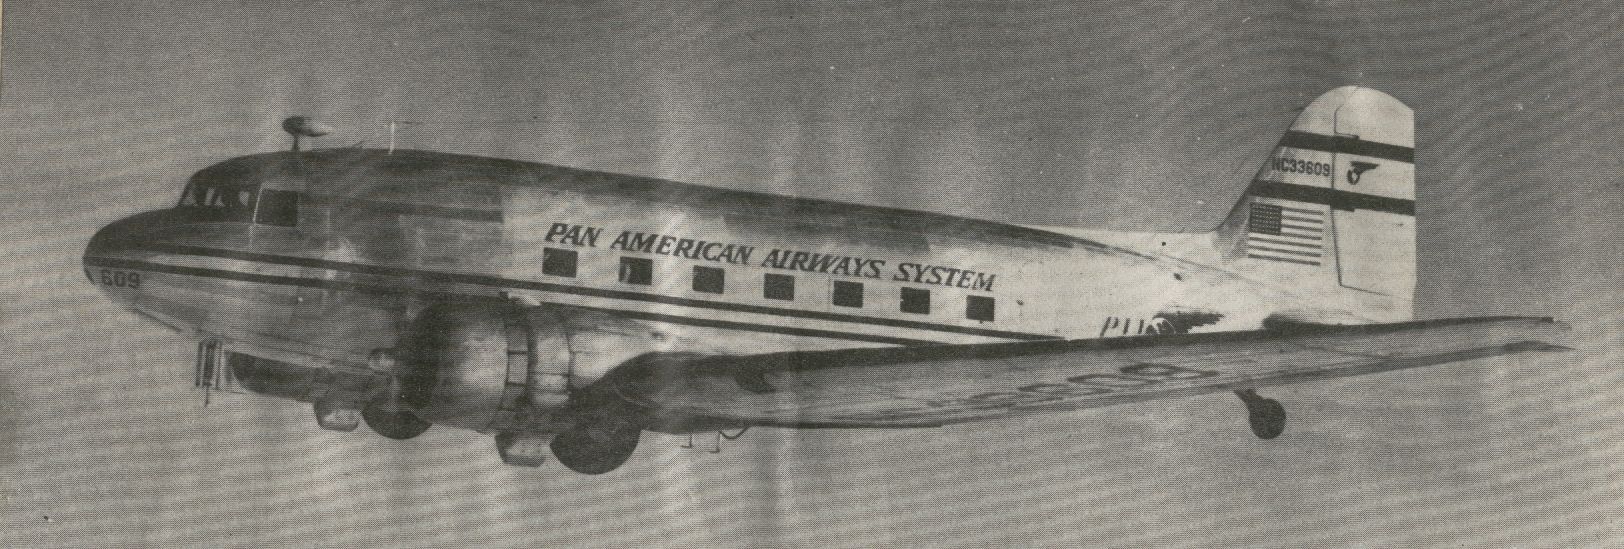 A Pan American DC 3 in-flight.